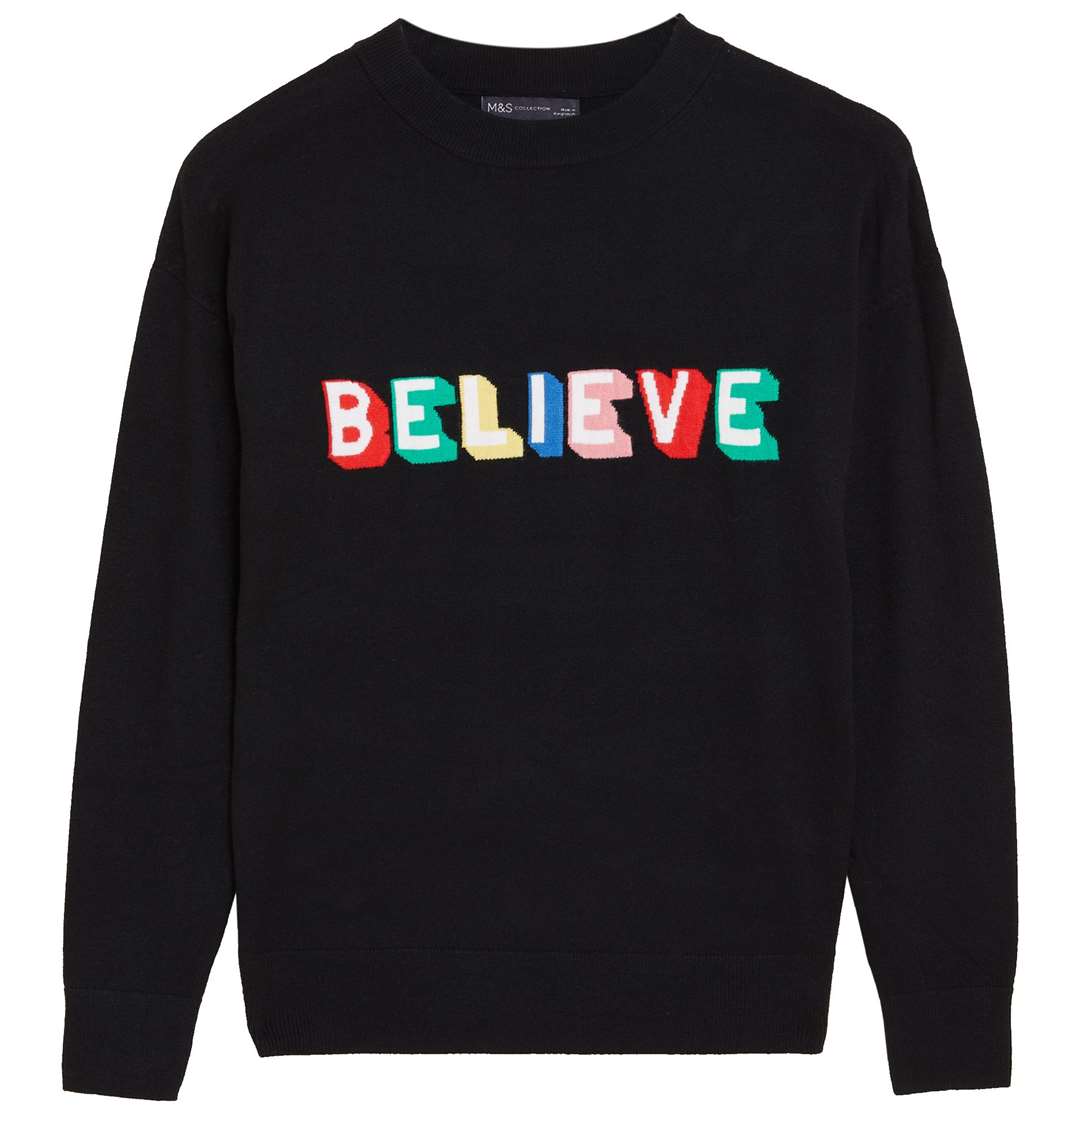 Believe women's slogan jumper, £19.50, M&S Collection